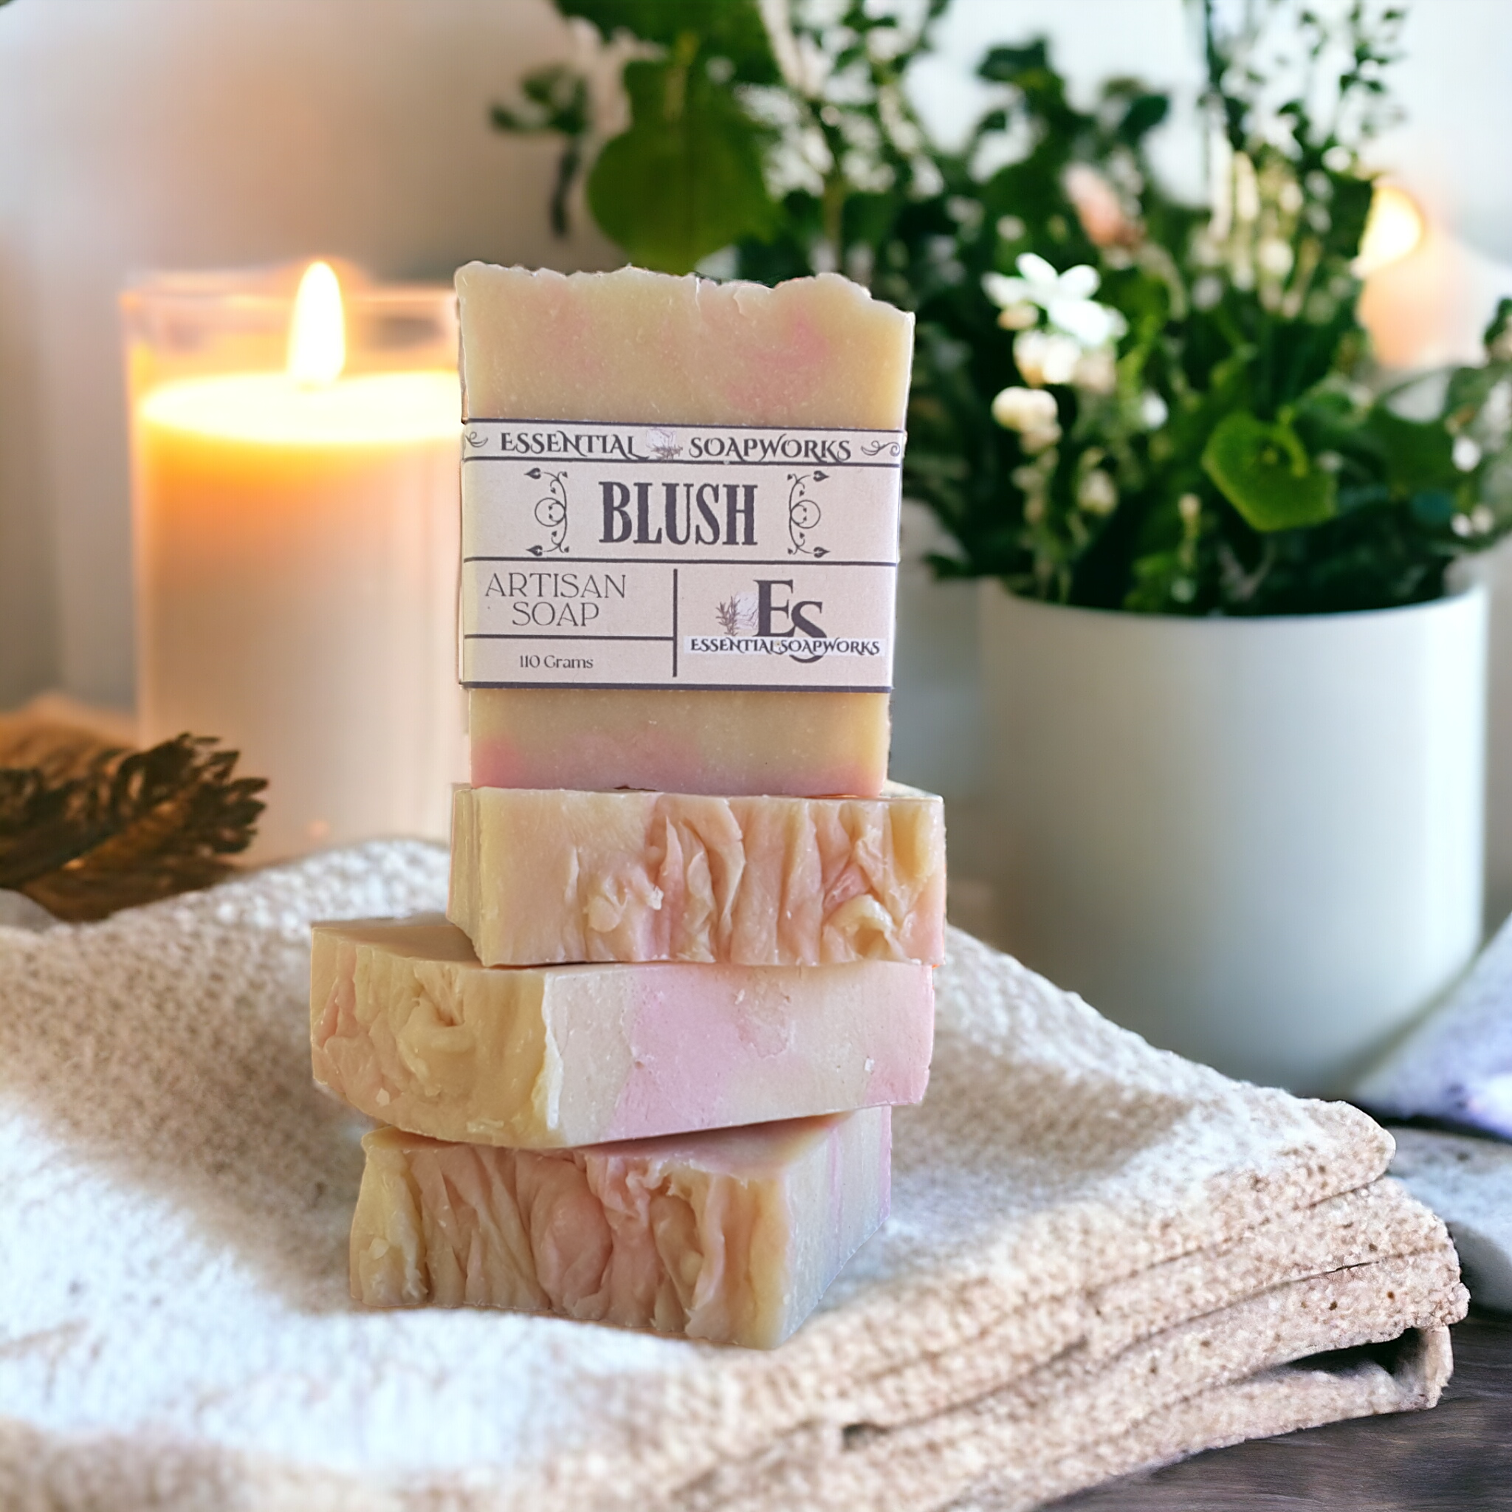 Blush Artisan Soap